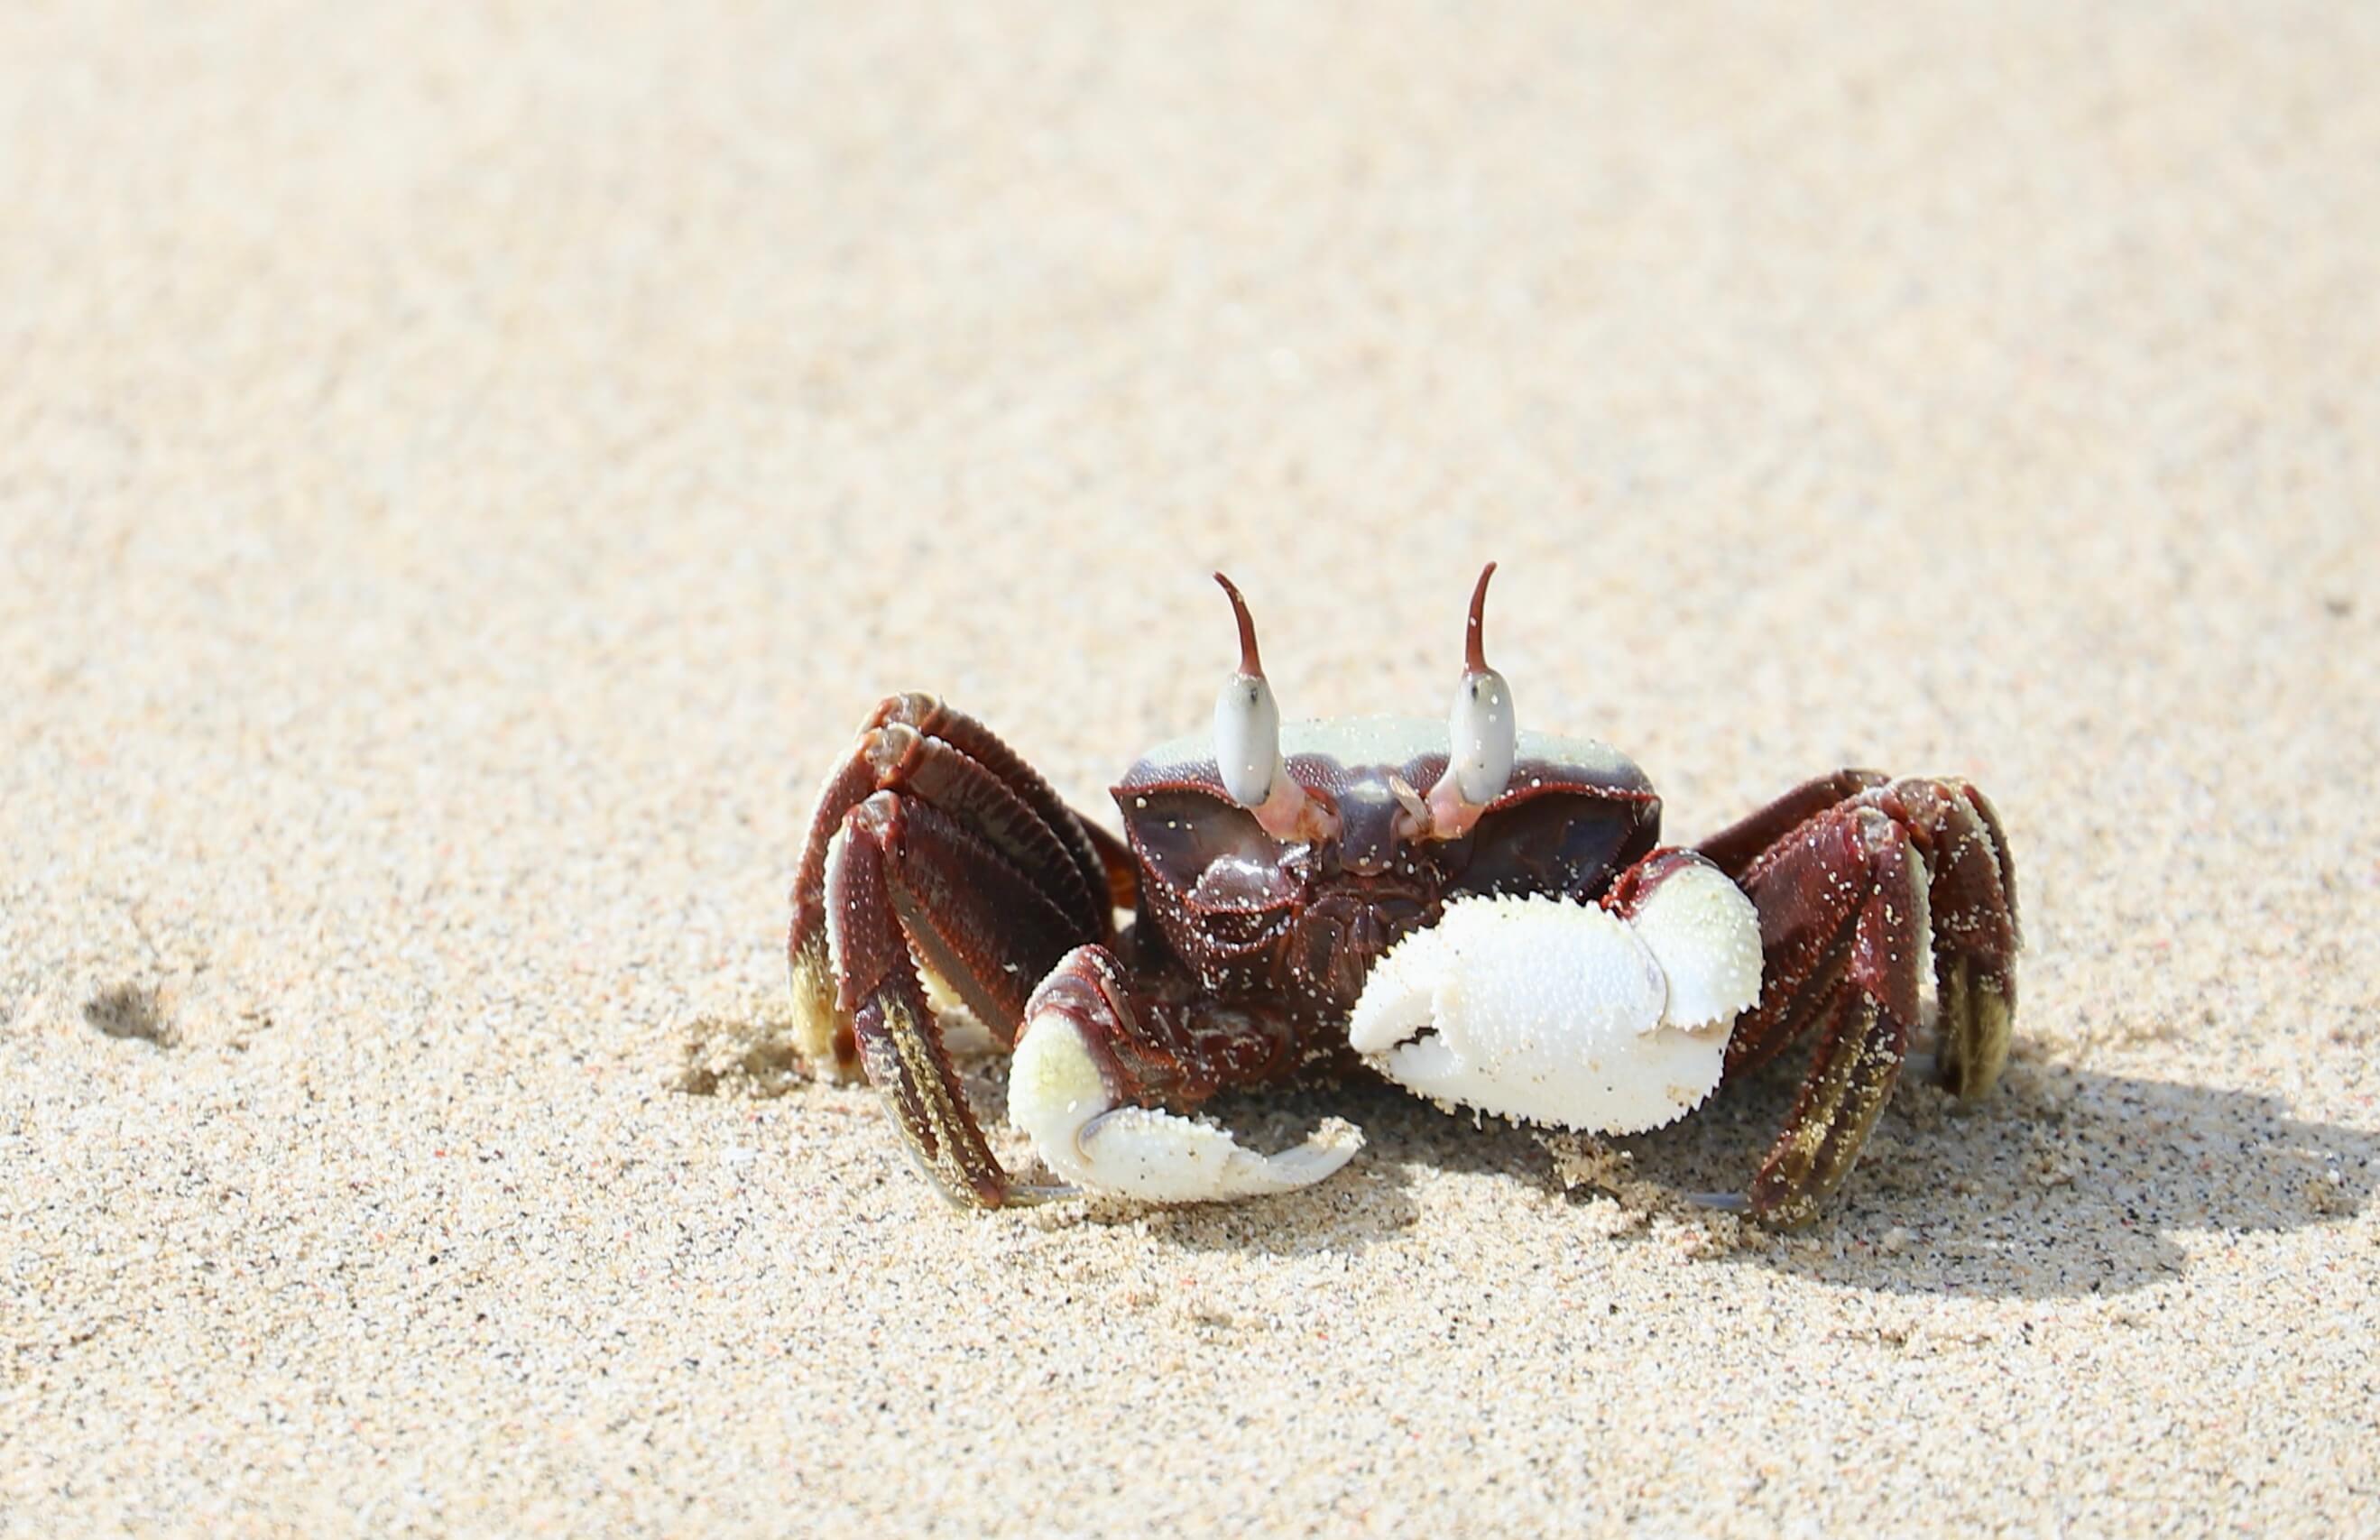 Brown crab on sandy beach